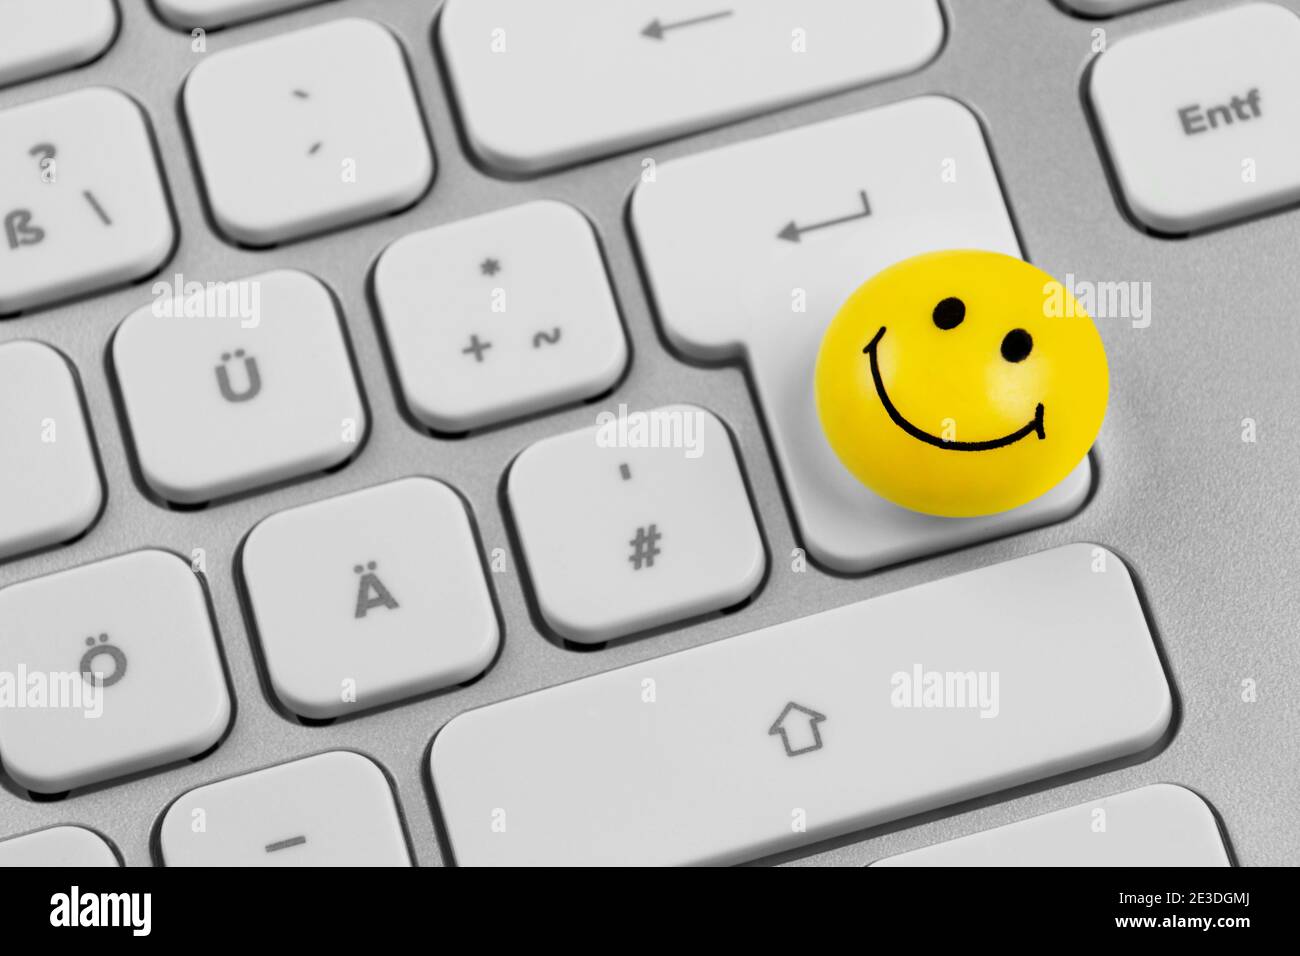 Yellow Smiley symbol and keyboard close up Stock Photo